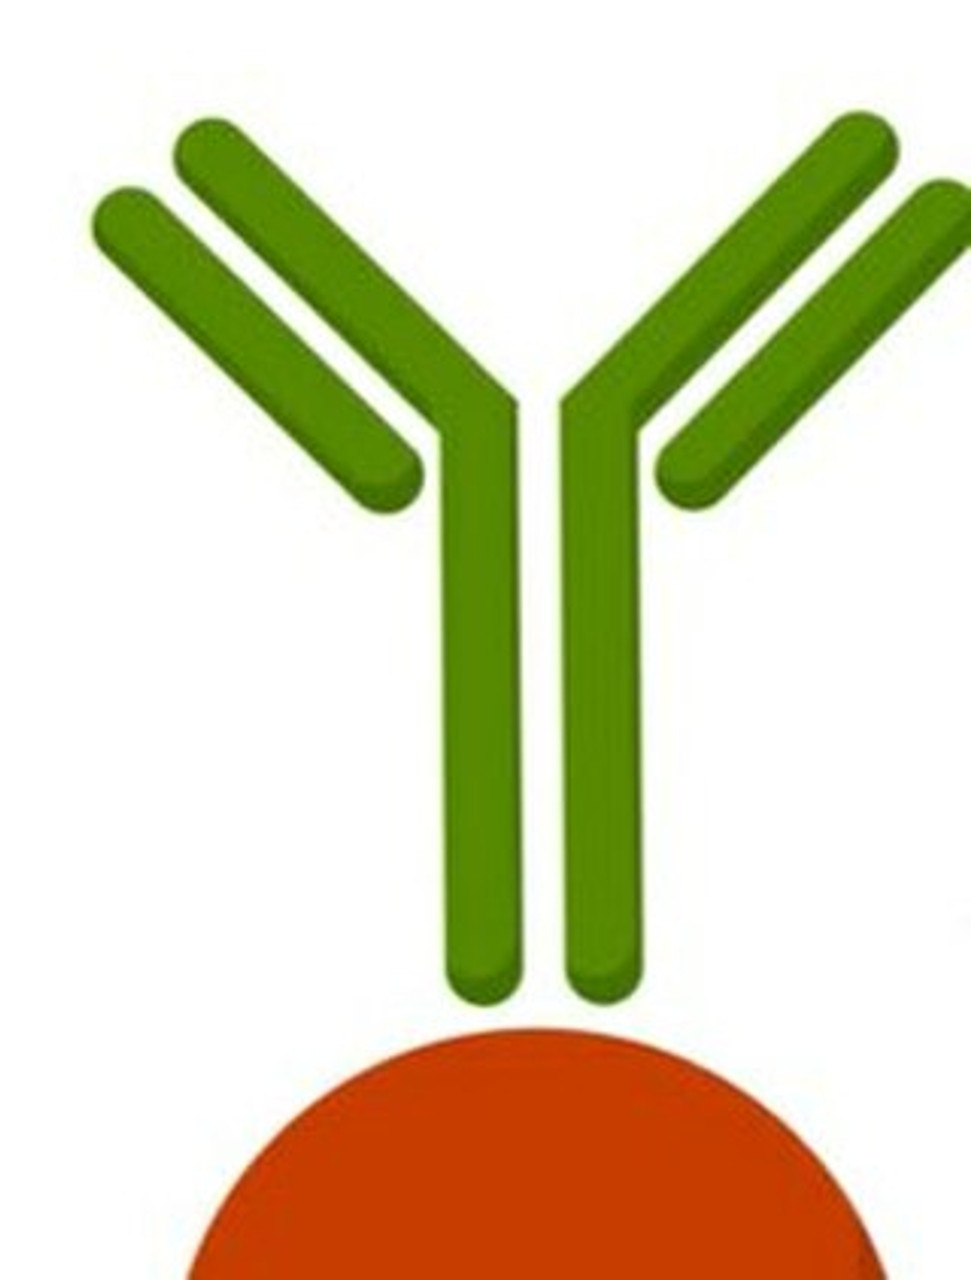 XCR1 Antibody